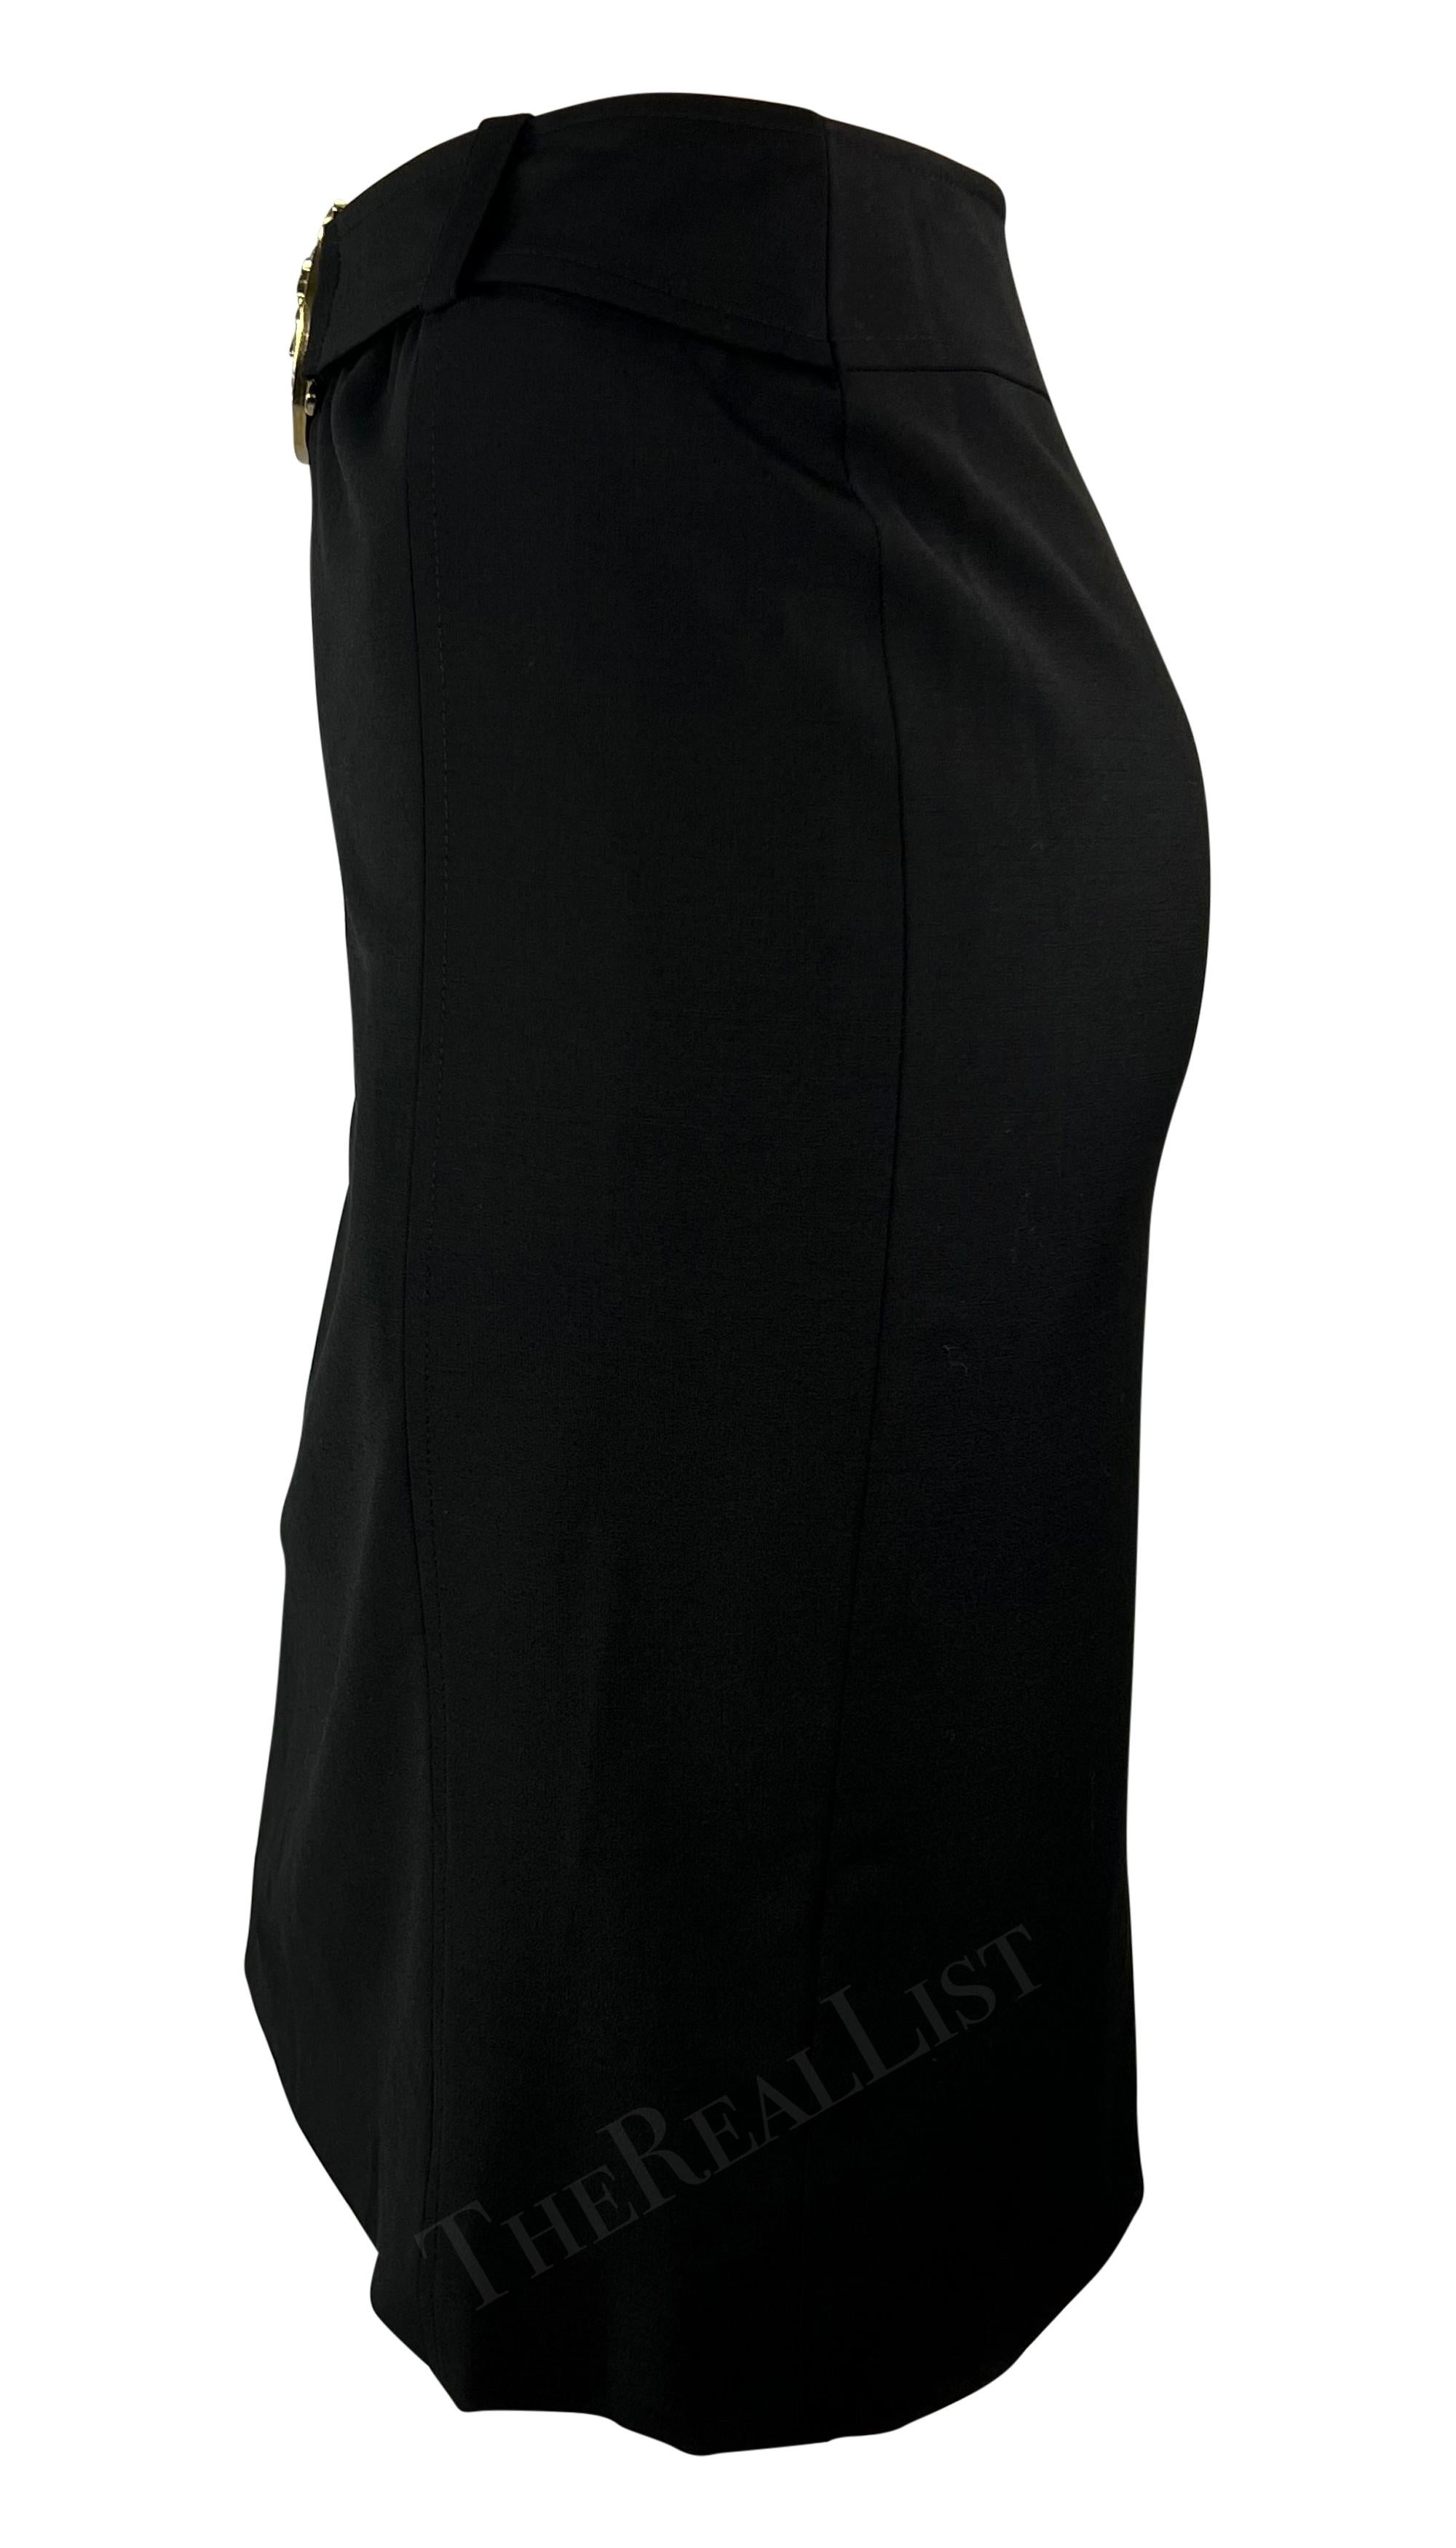 S/S 2005 Versace by Donatella Black Medusa Belt Pencil Skirt For Sale 1